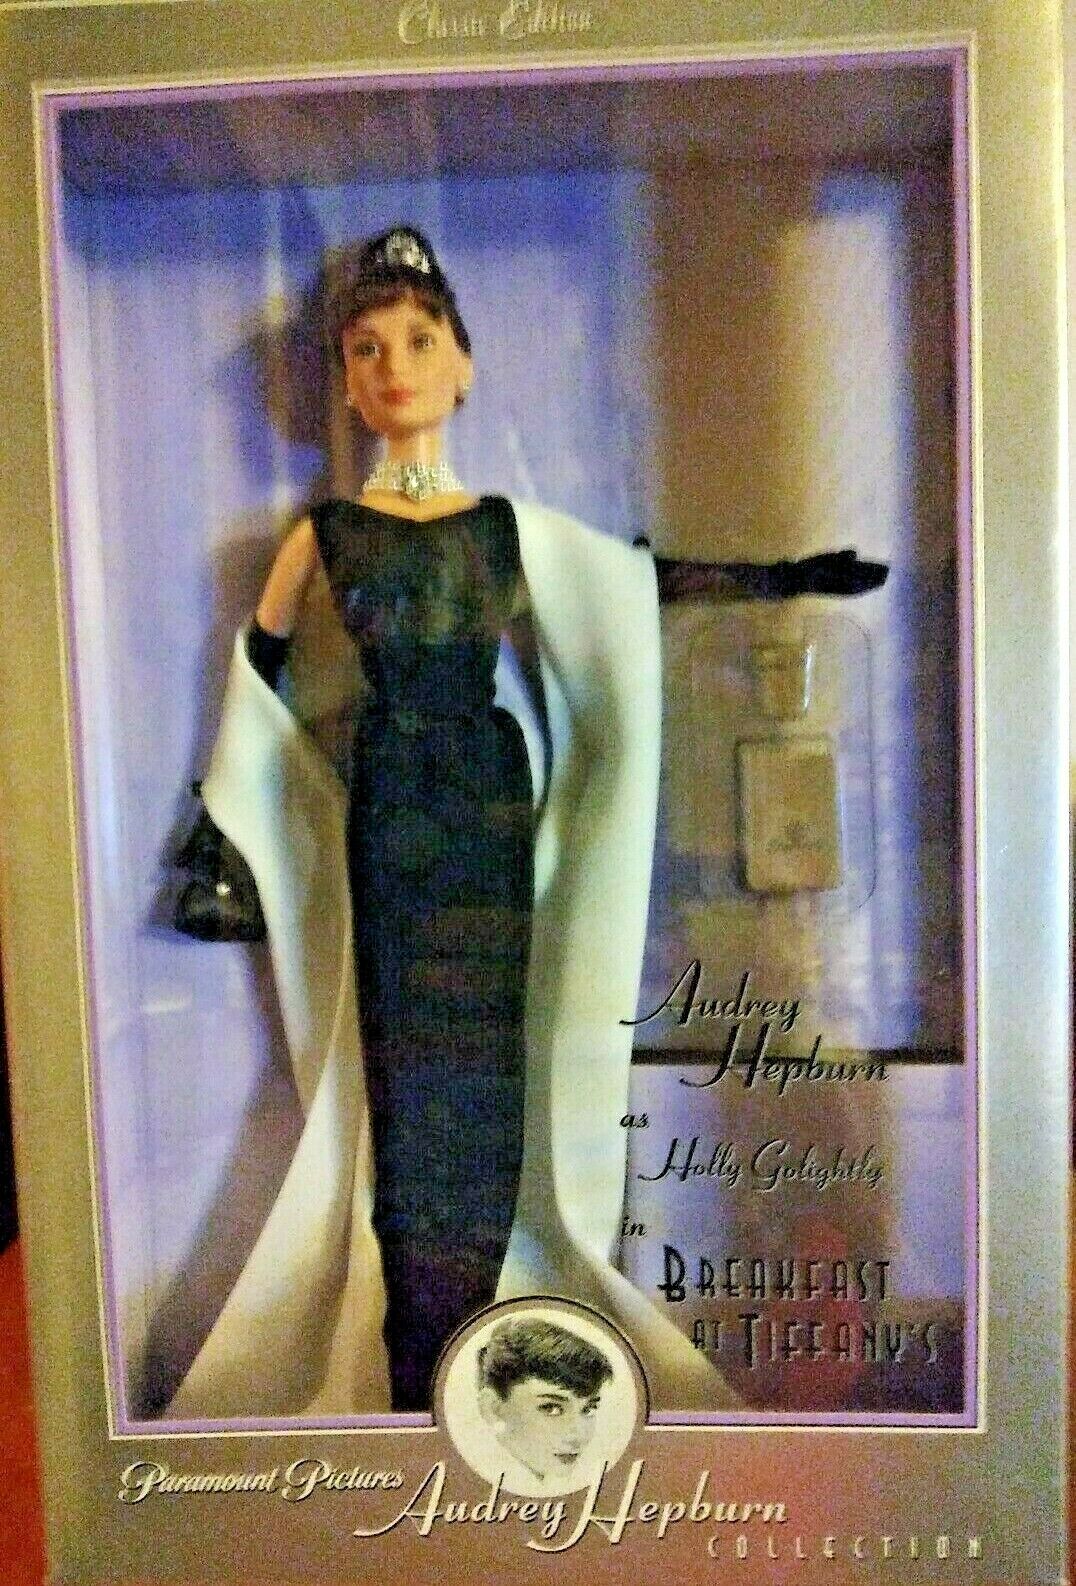 Audrey Hepburn As Holly Golightly Breakfast At Tiffany's Barbie Doll #20355 Nrfb